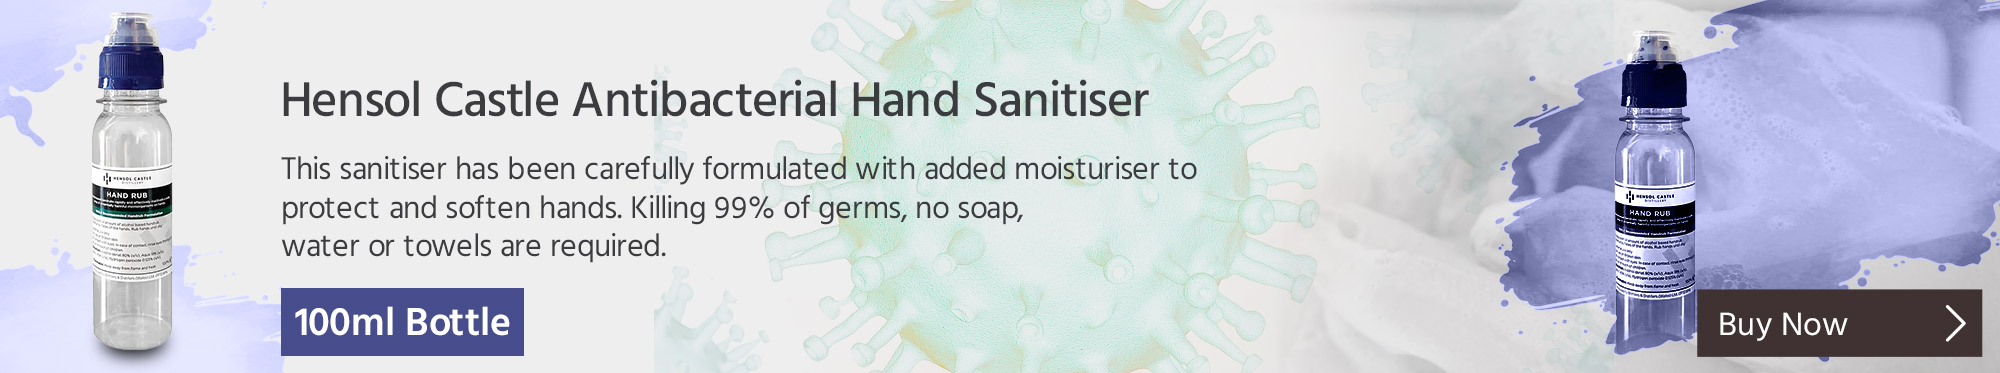 Hensol Castle Antibacterial Hand Sanitiser 